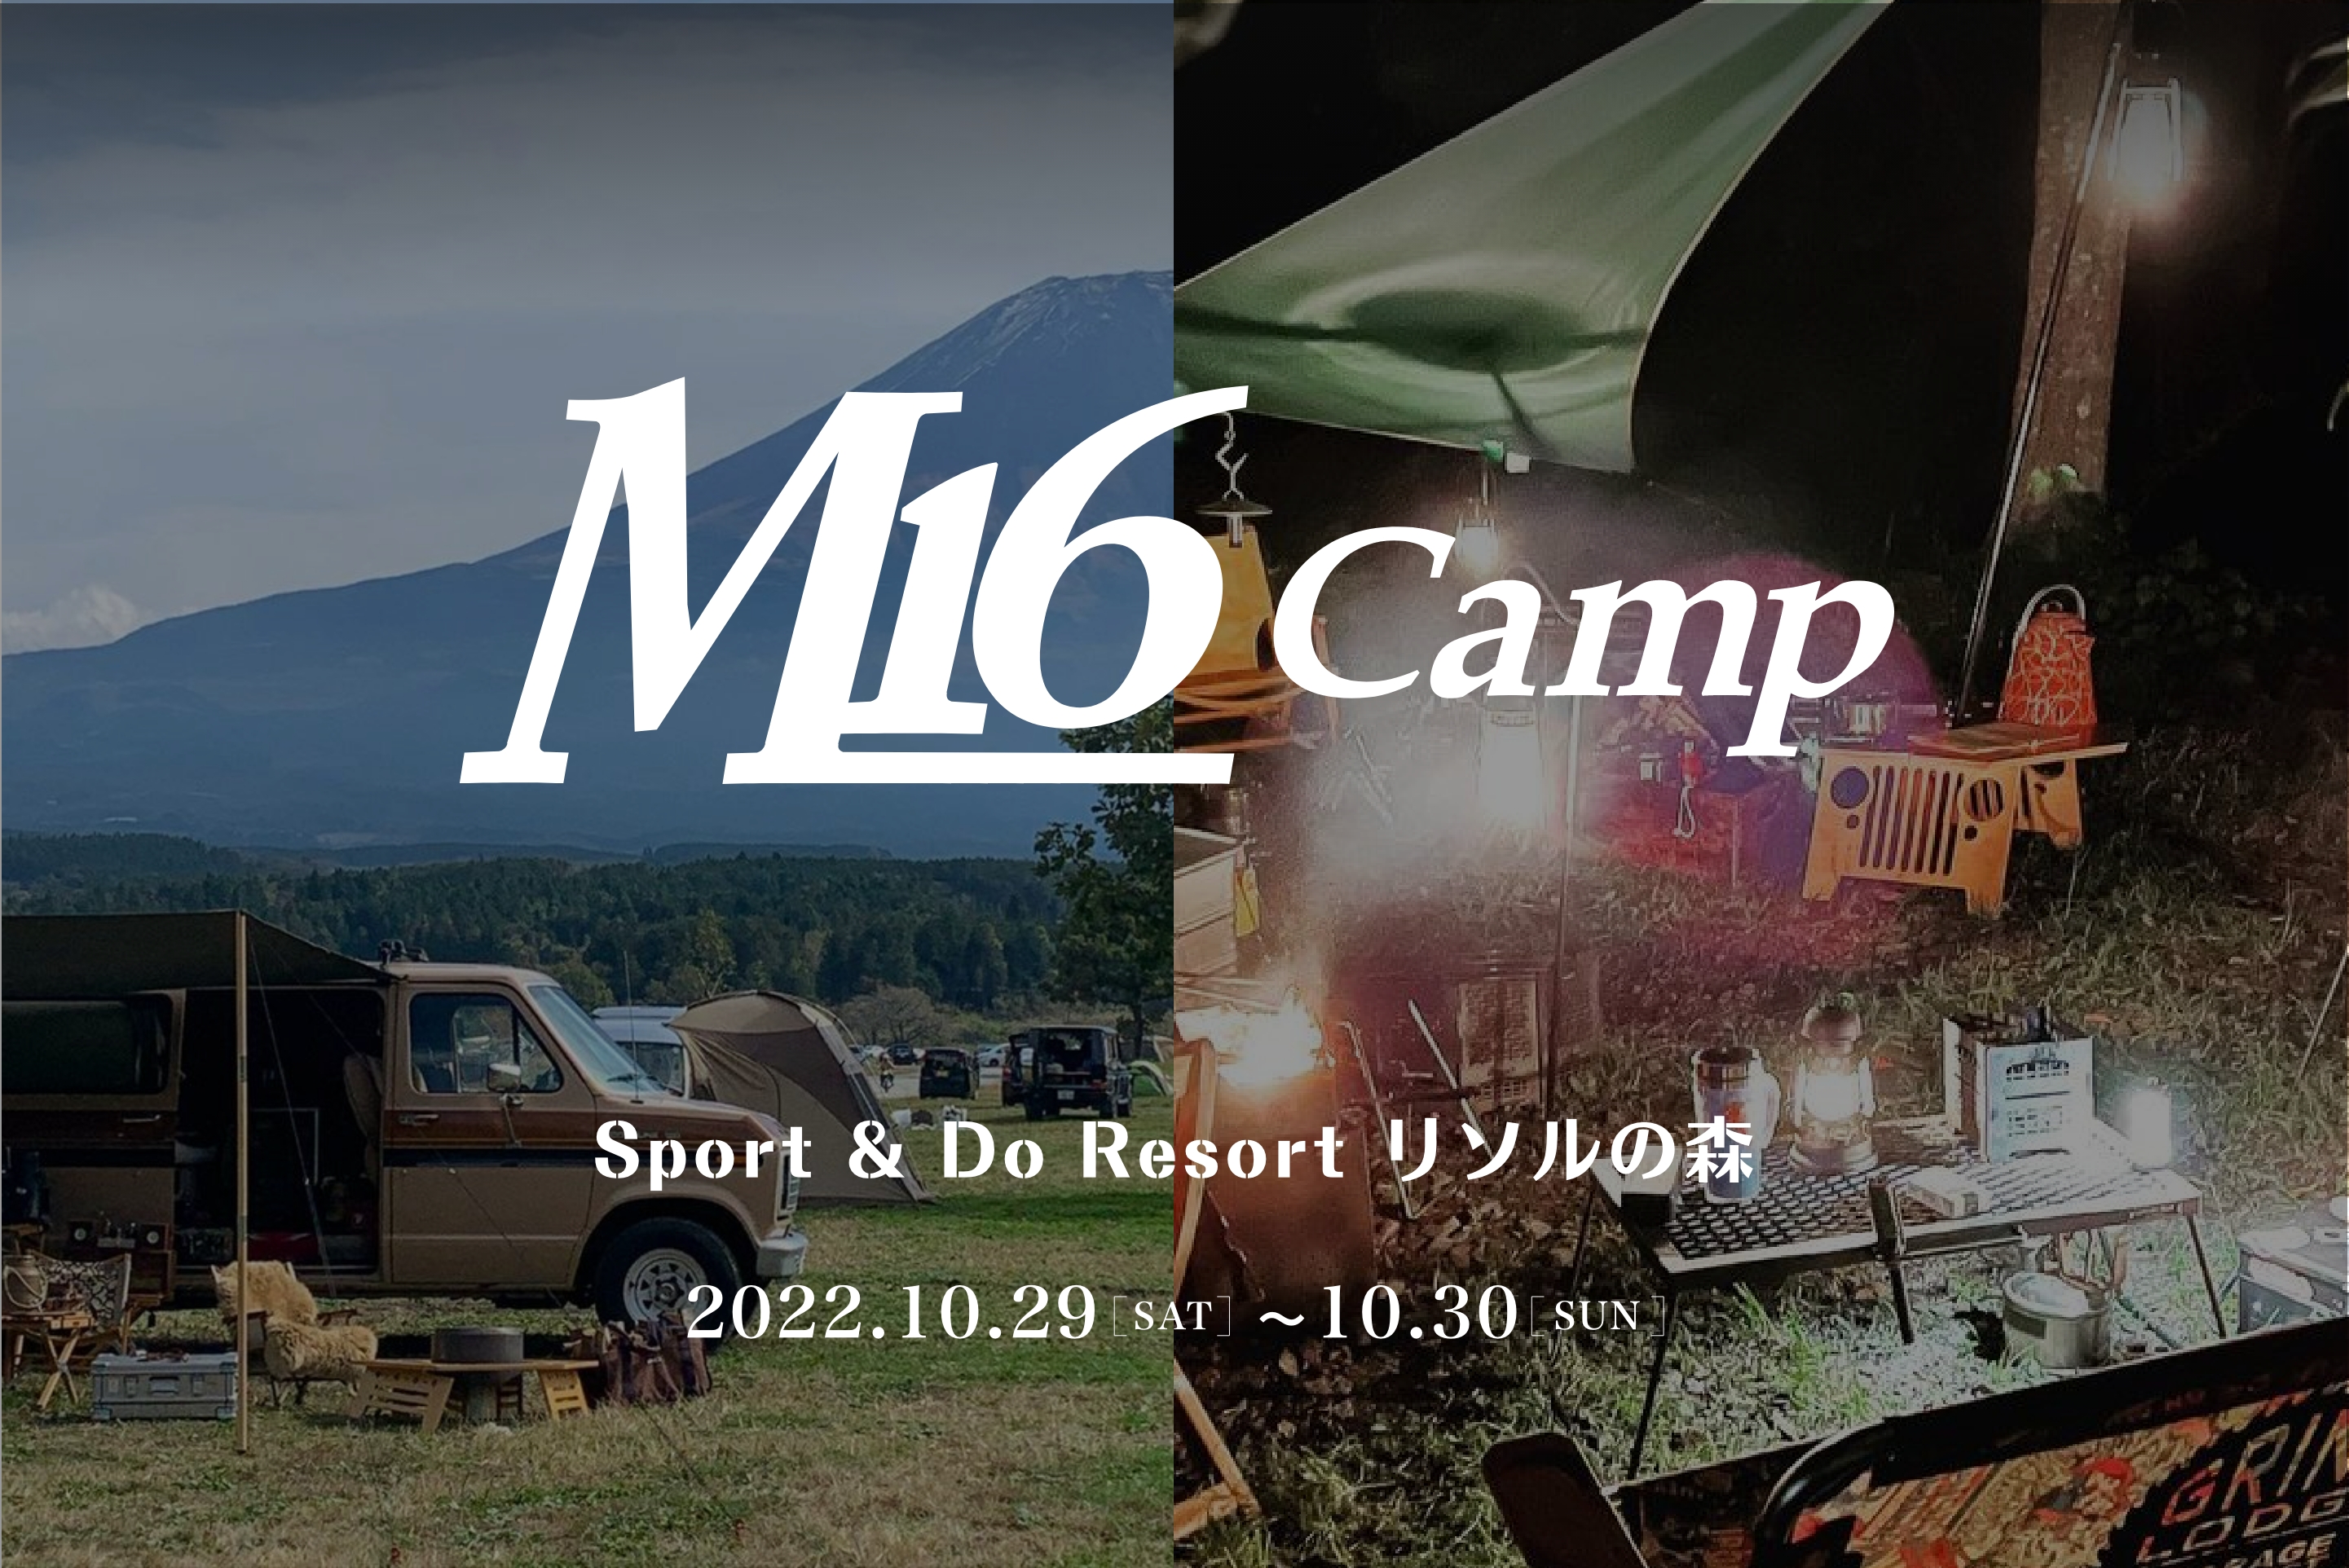 M16 Camping Equipment